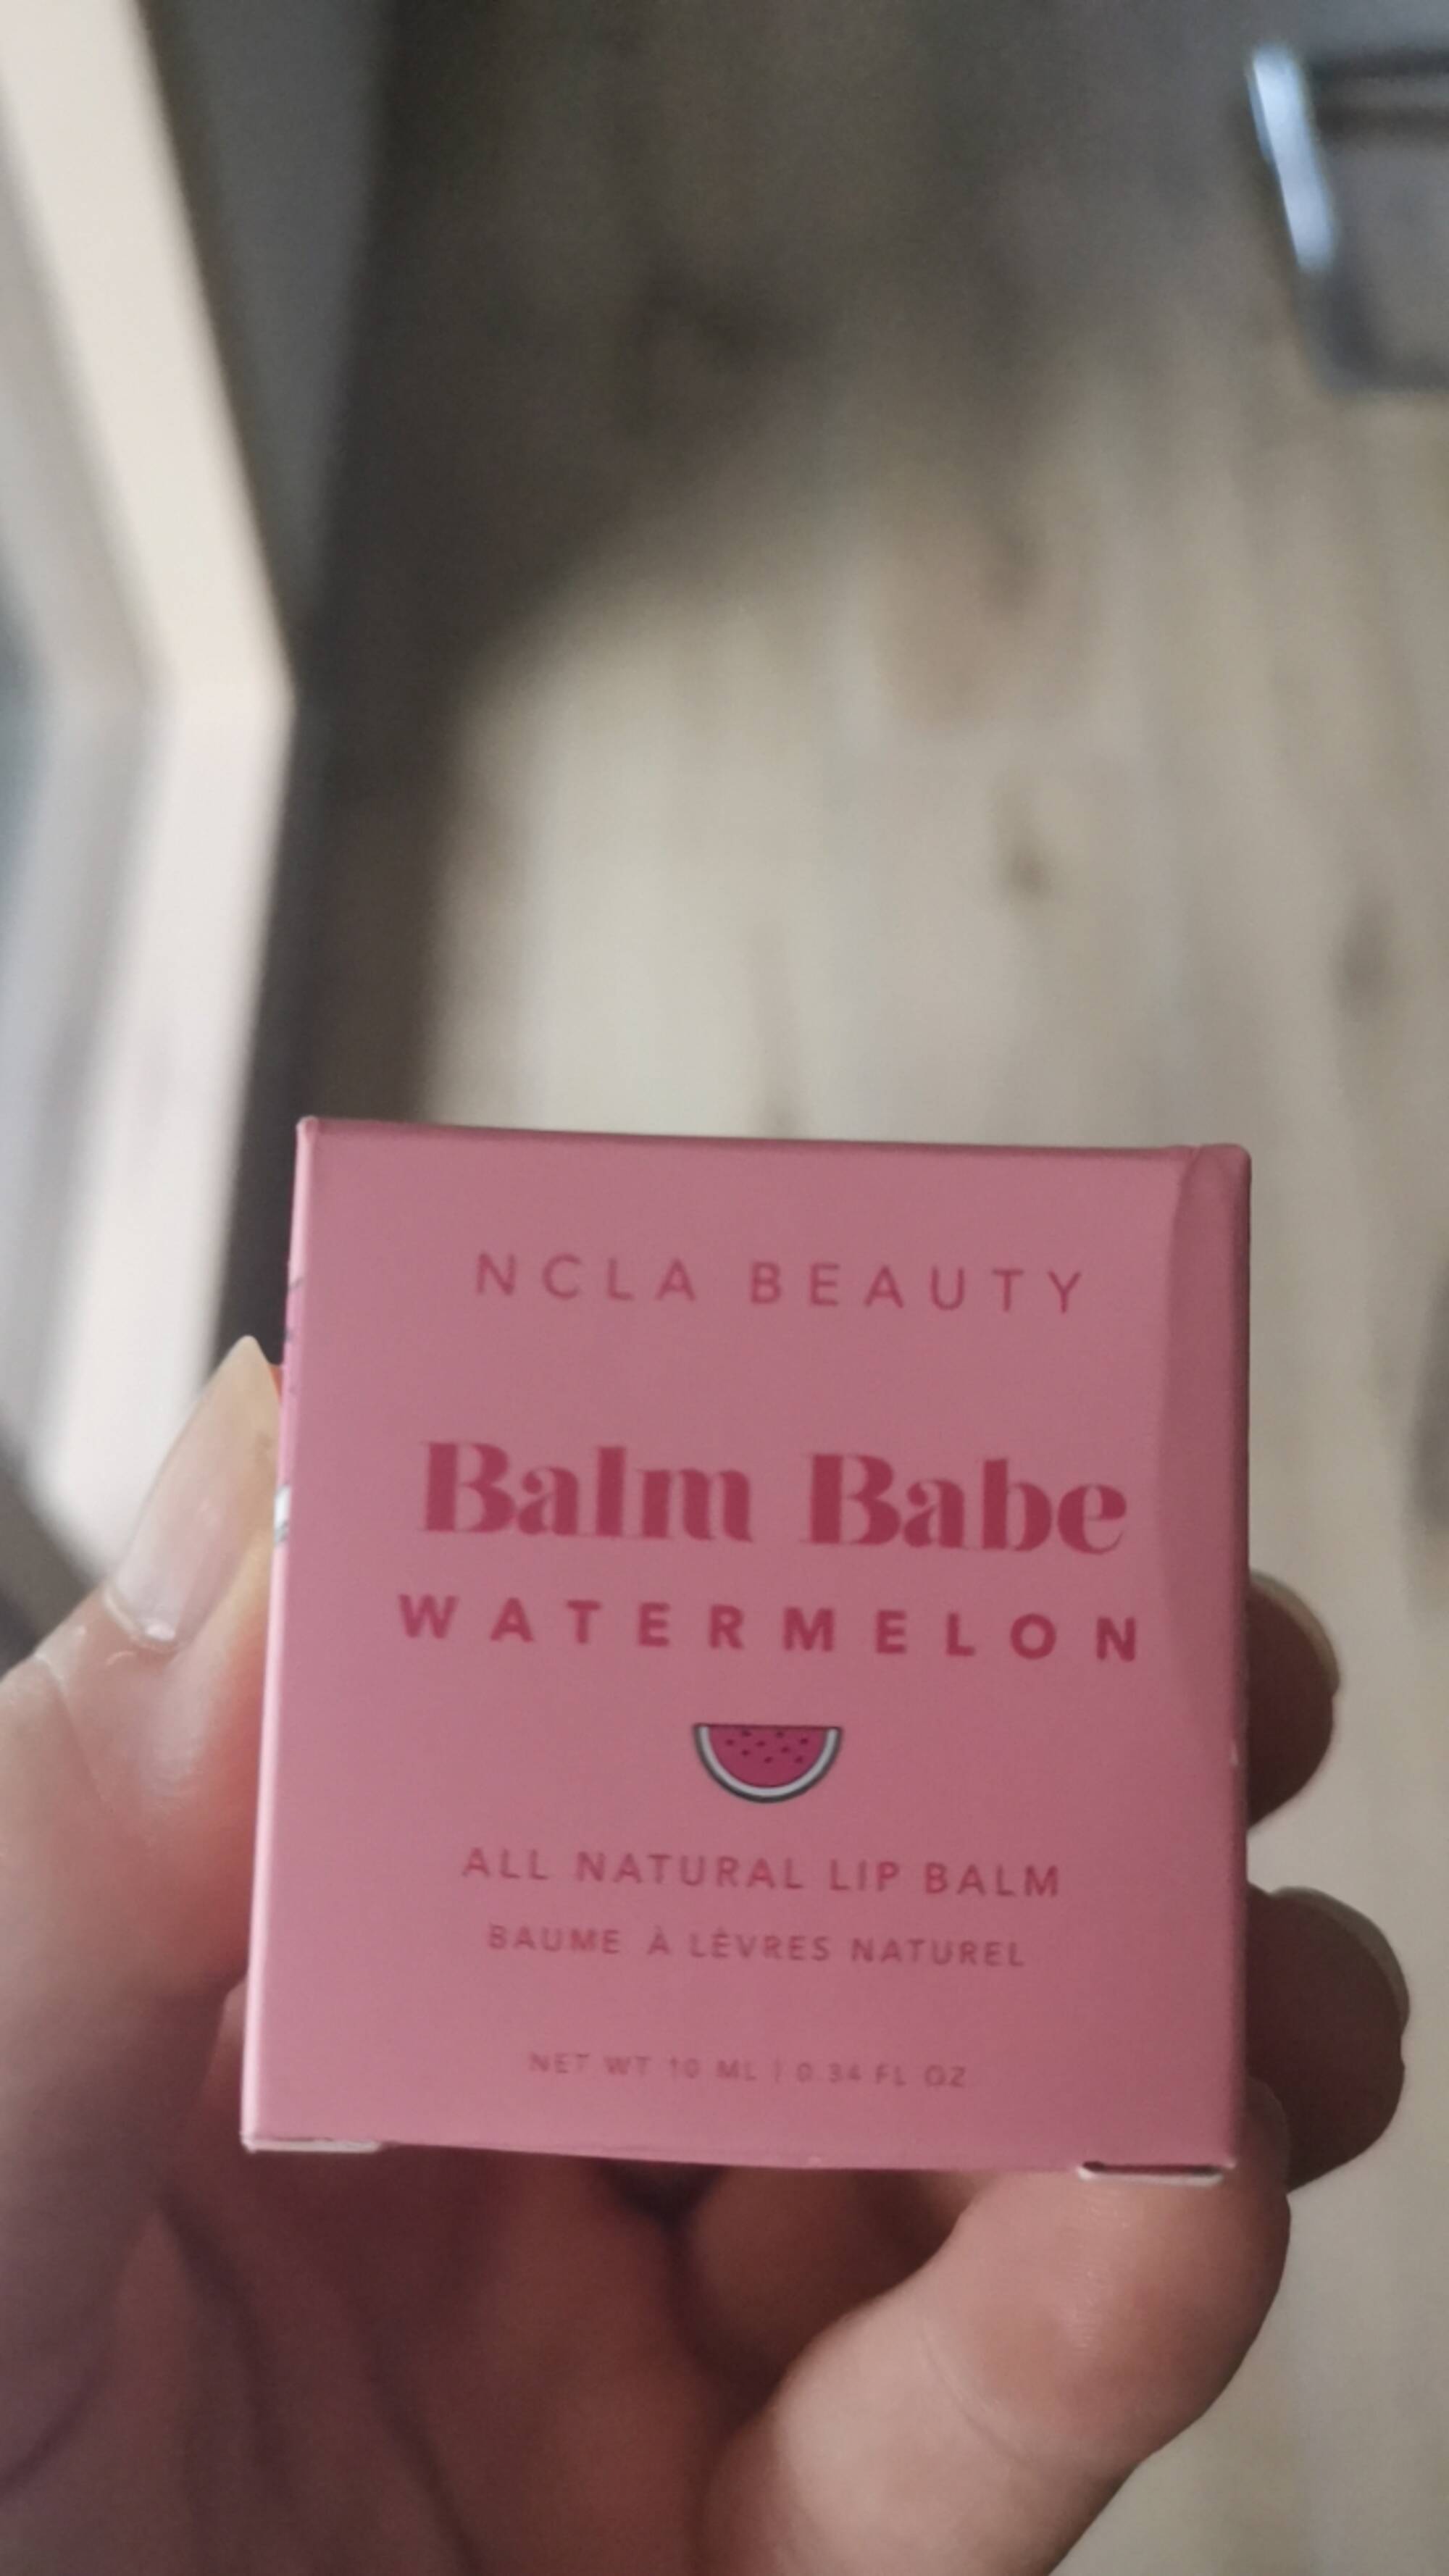 NCLA BEAUTY - Watermelon -  Balm babe